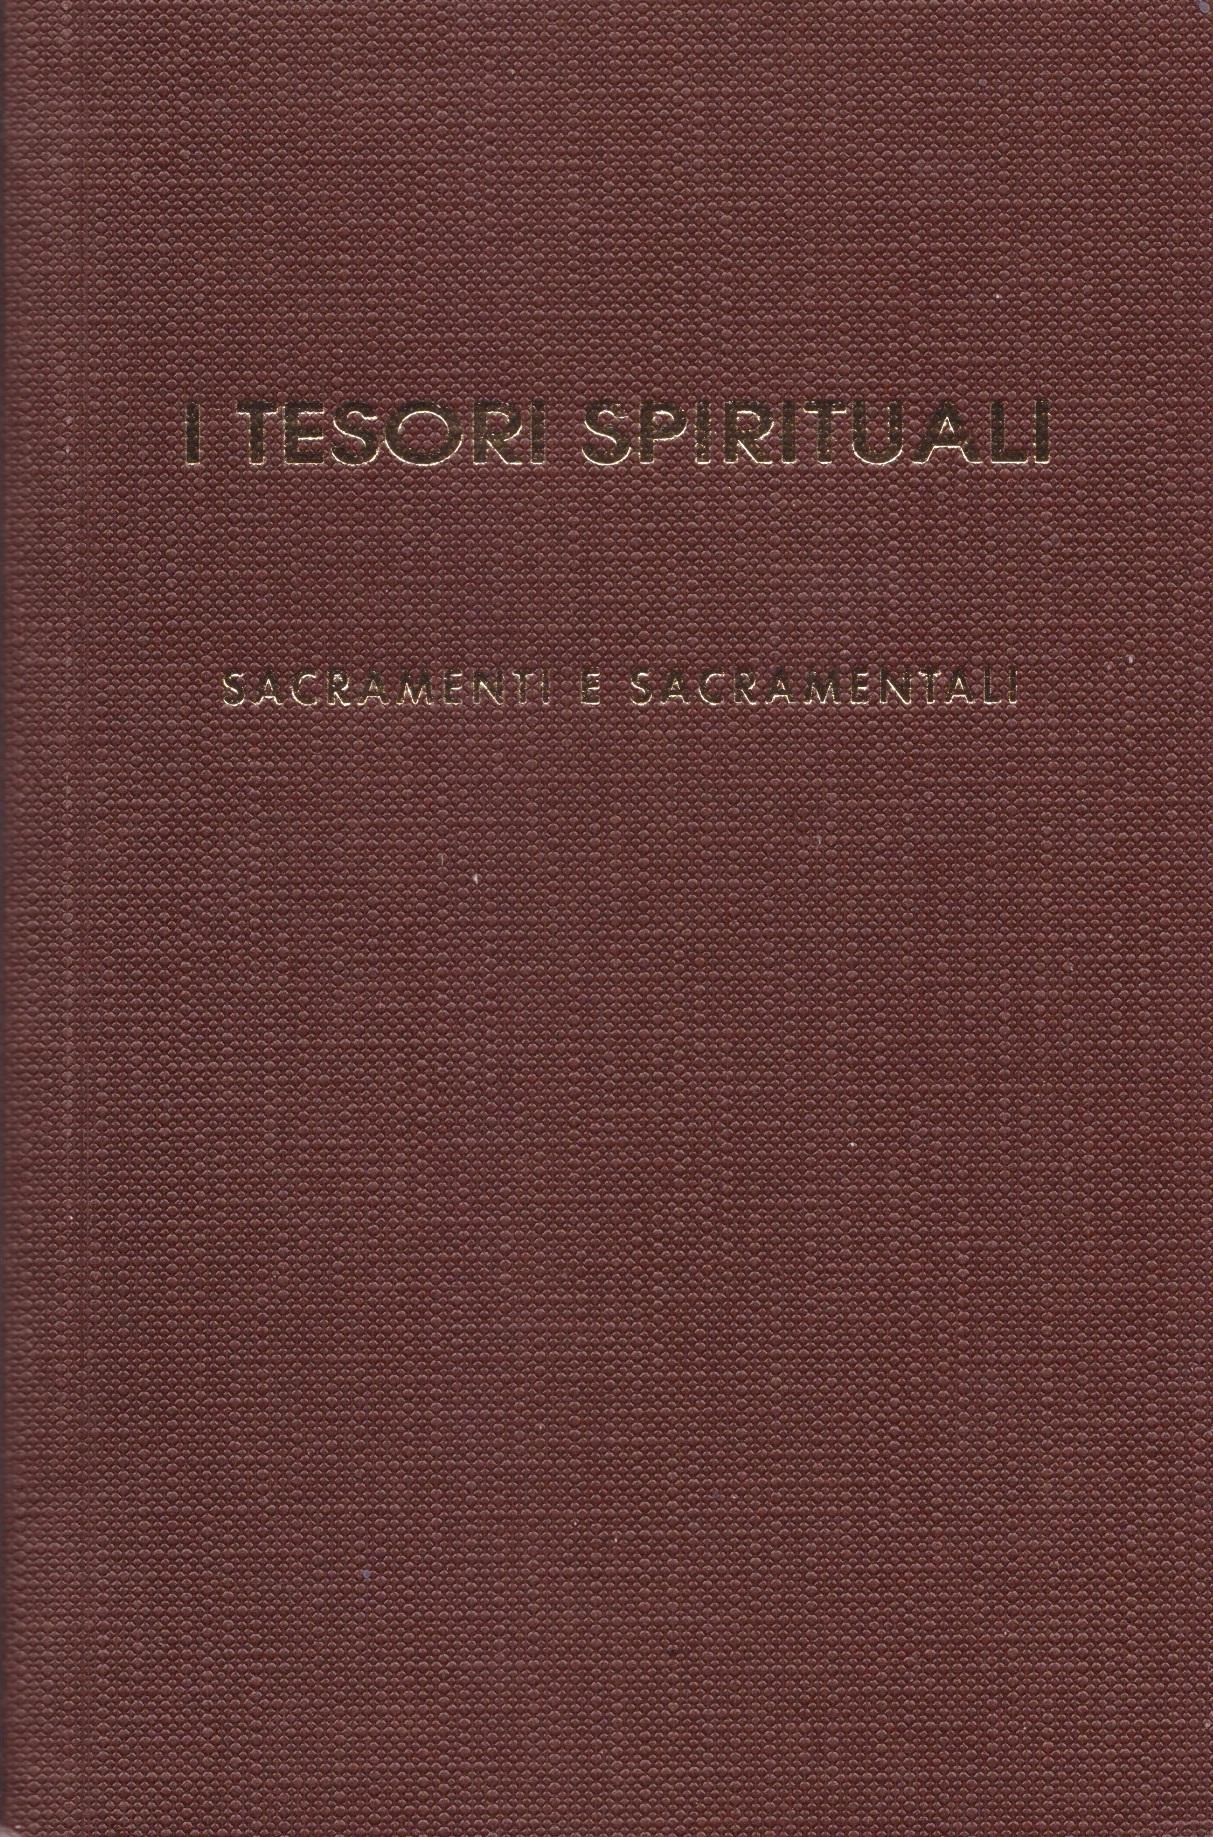 I Tesori Spirituali - Sacramenti e Sacramentali